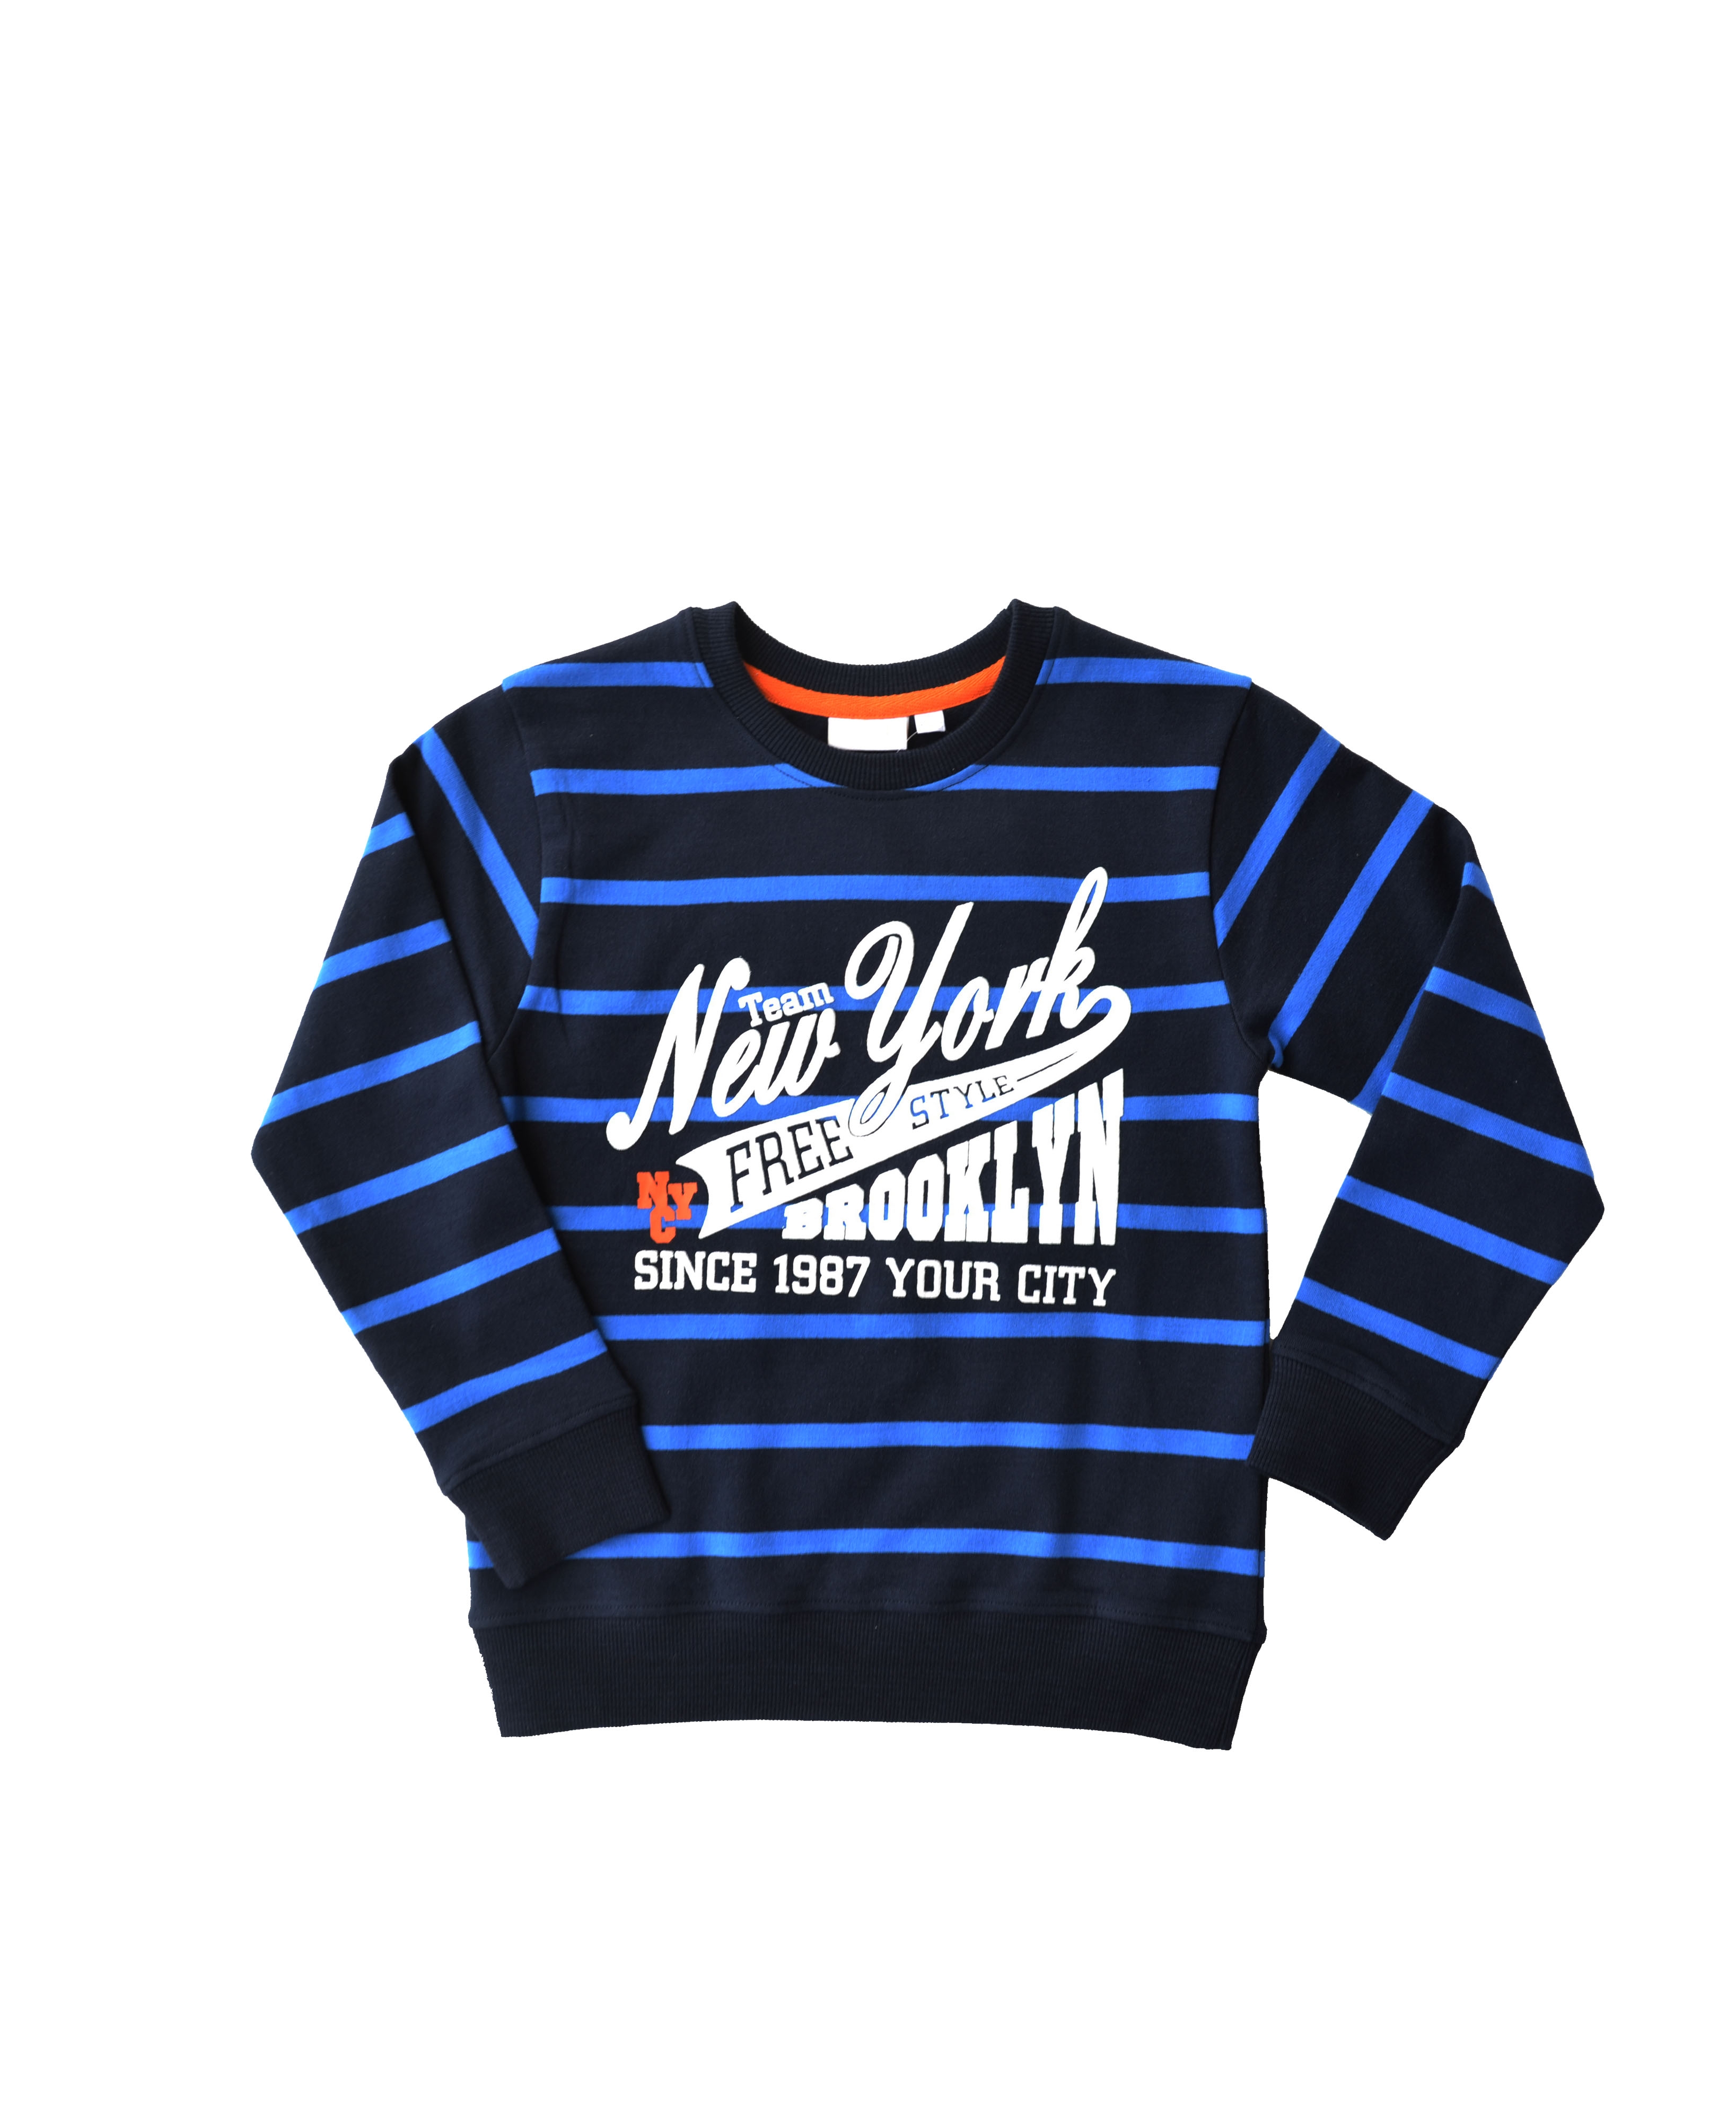 New York Brooklyn Print on Navy Stripes Long Sleeves Sweatshirt (French Terry)